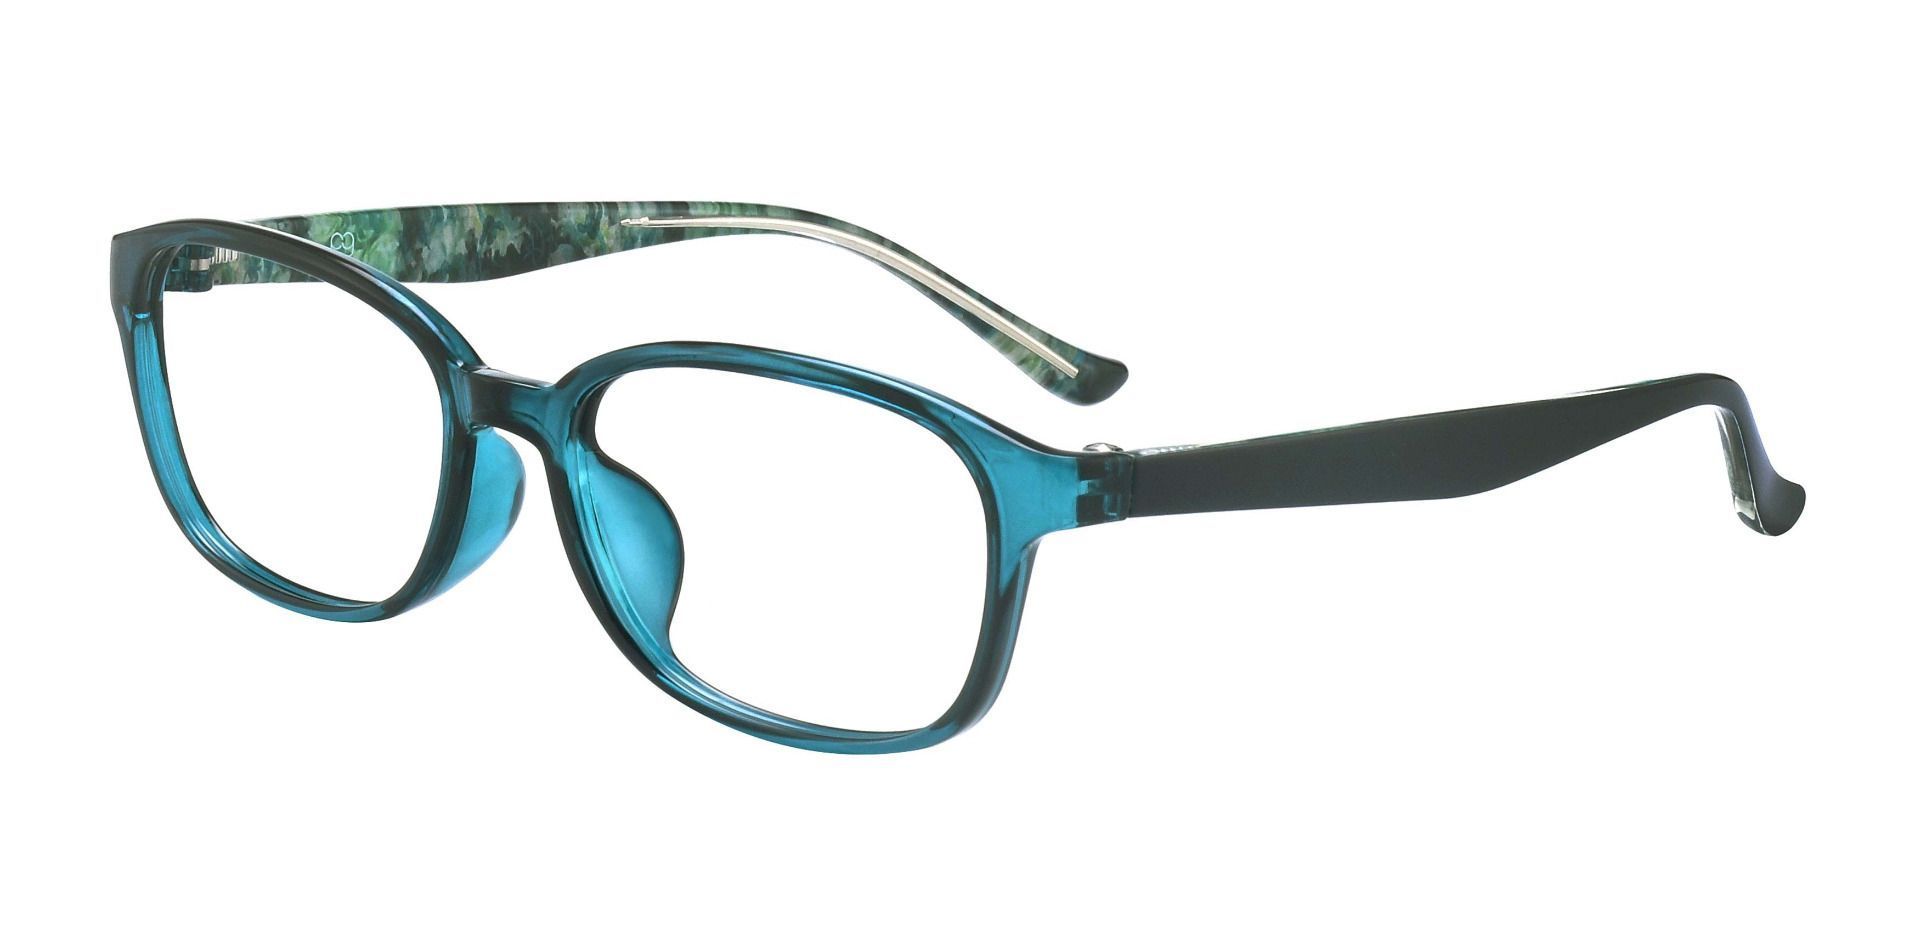 Hemingway Oval Progressive Glasses - Blue